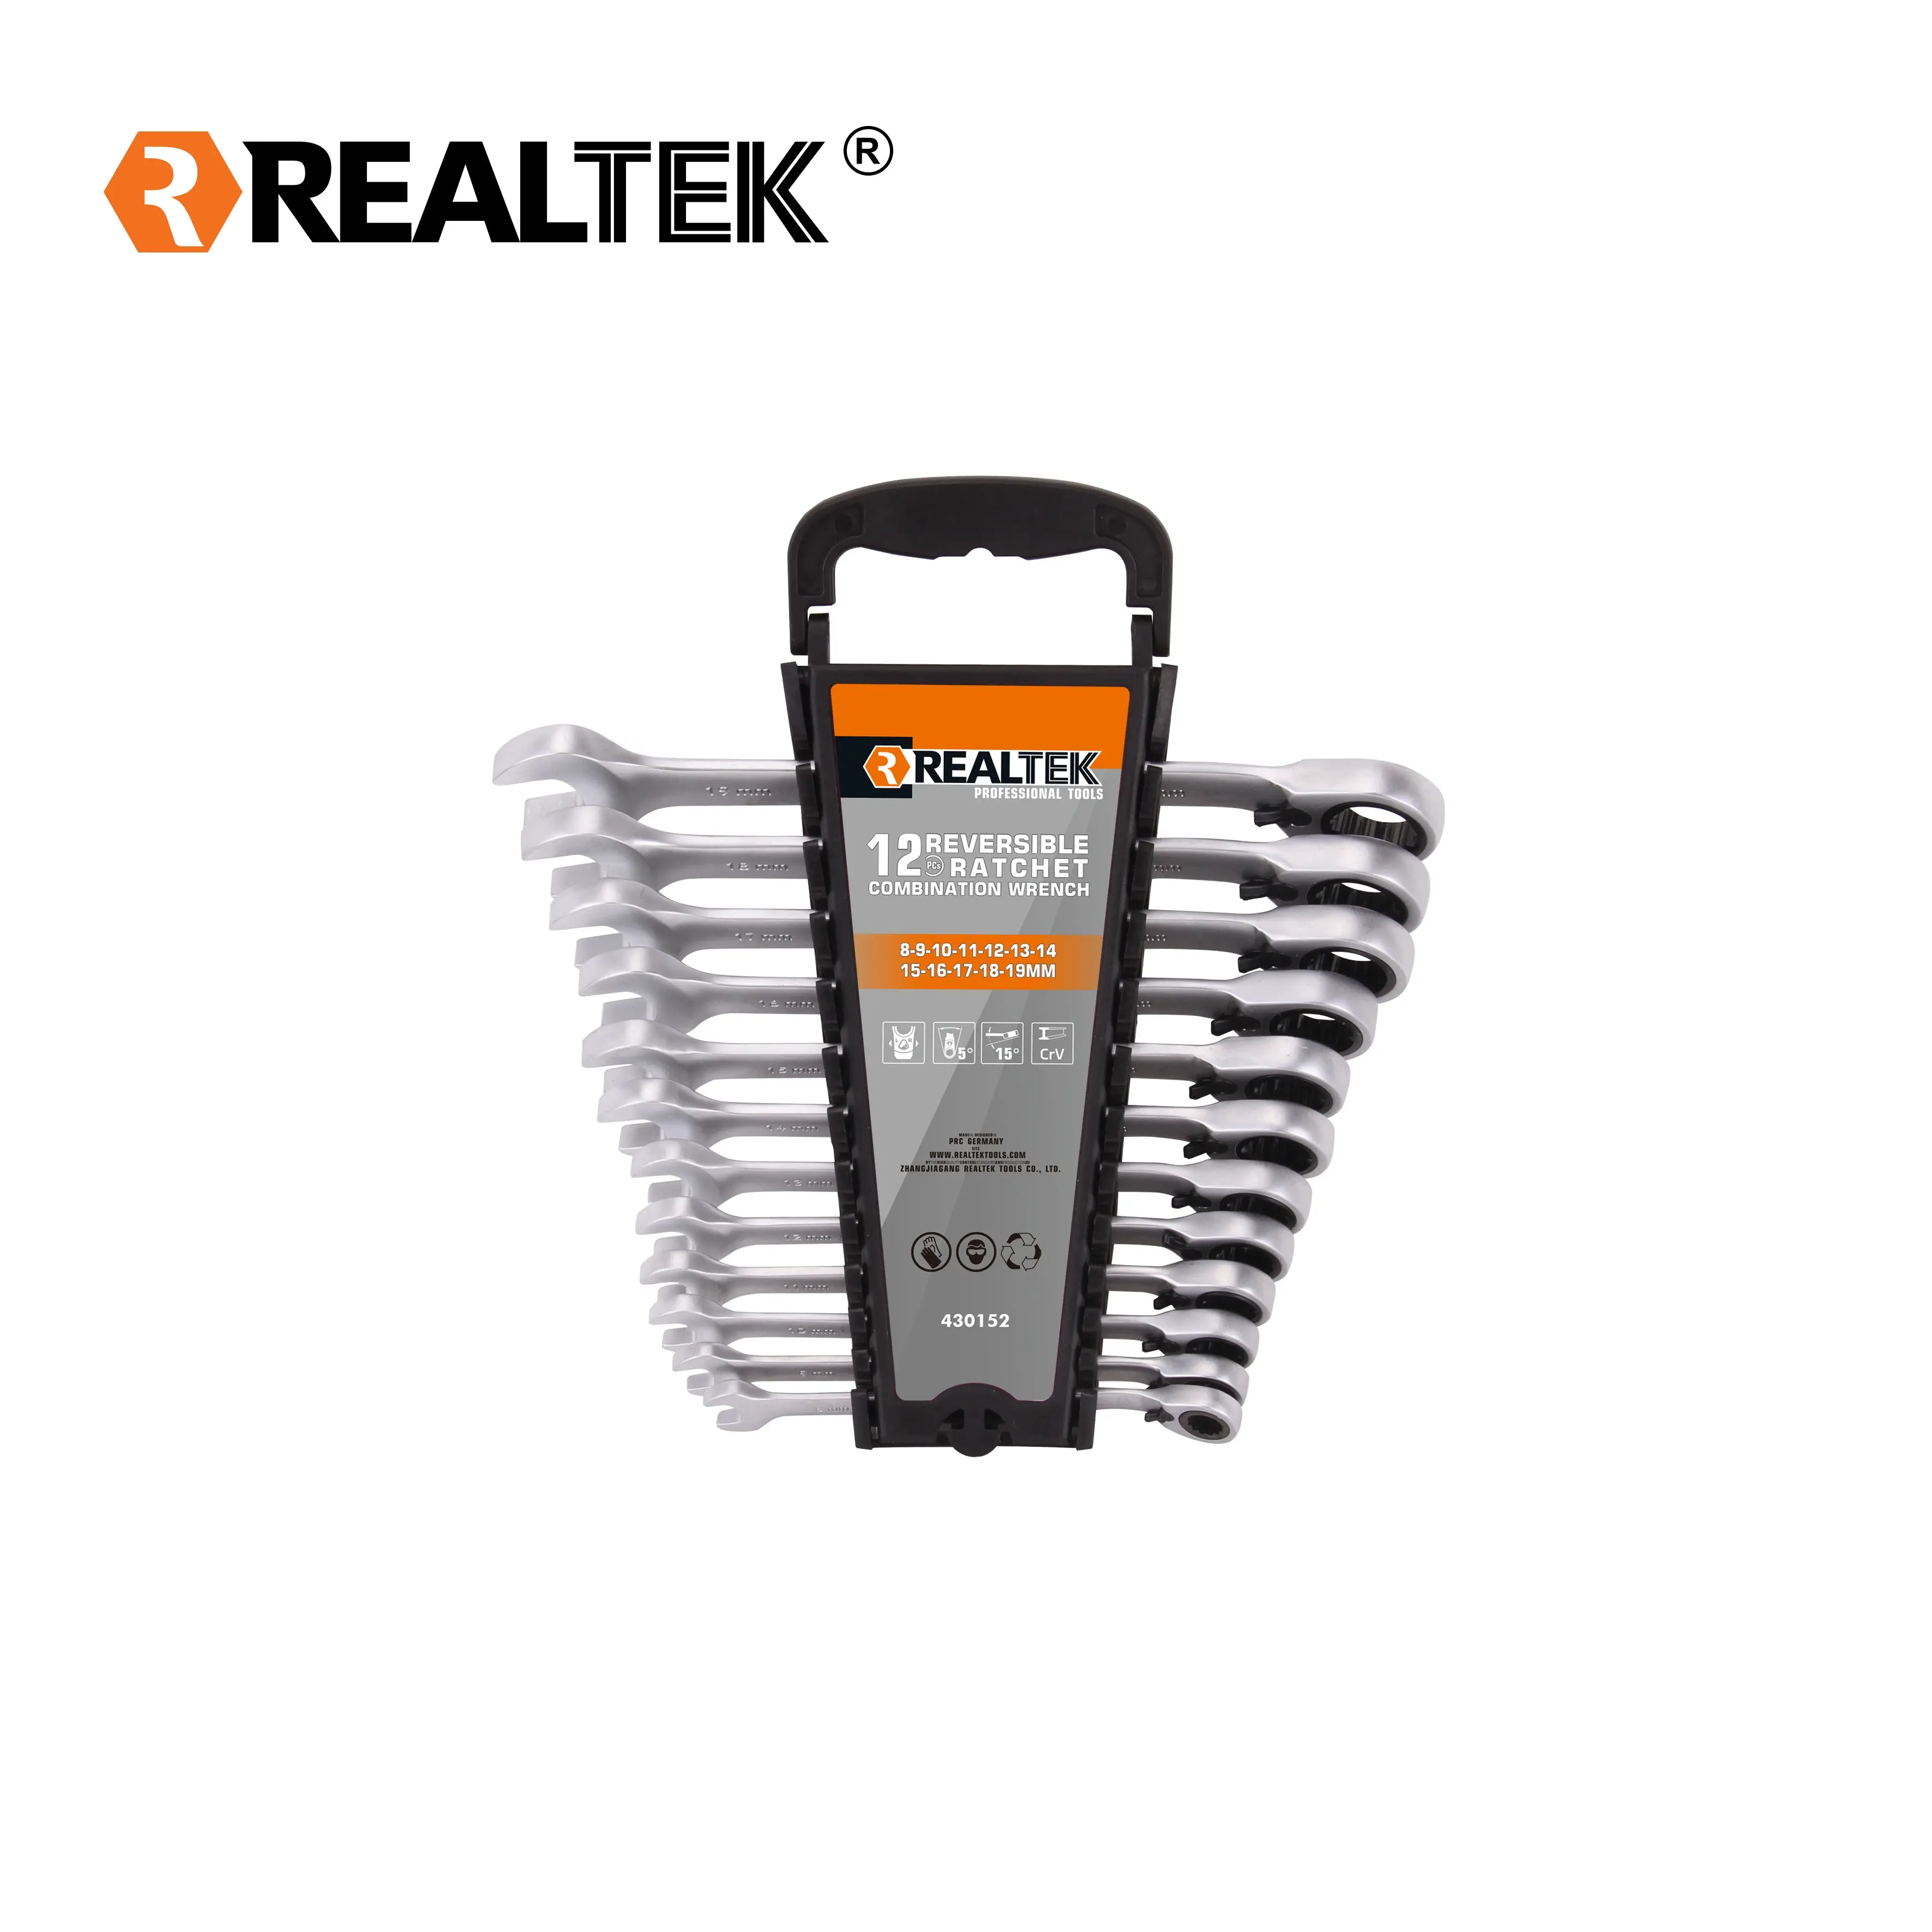 Realtek 12pcs Reversible Ratchet Wrench System Chrome Vanadium Steel Torque Ratchet Combination Spanner Gear Wrench